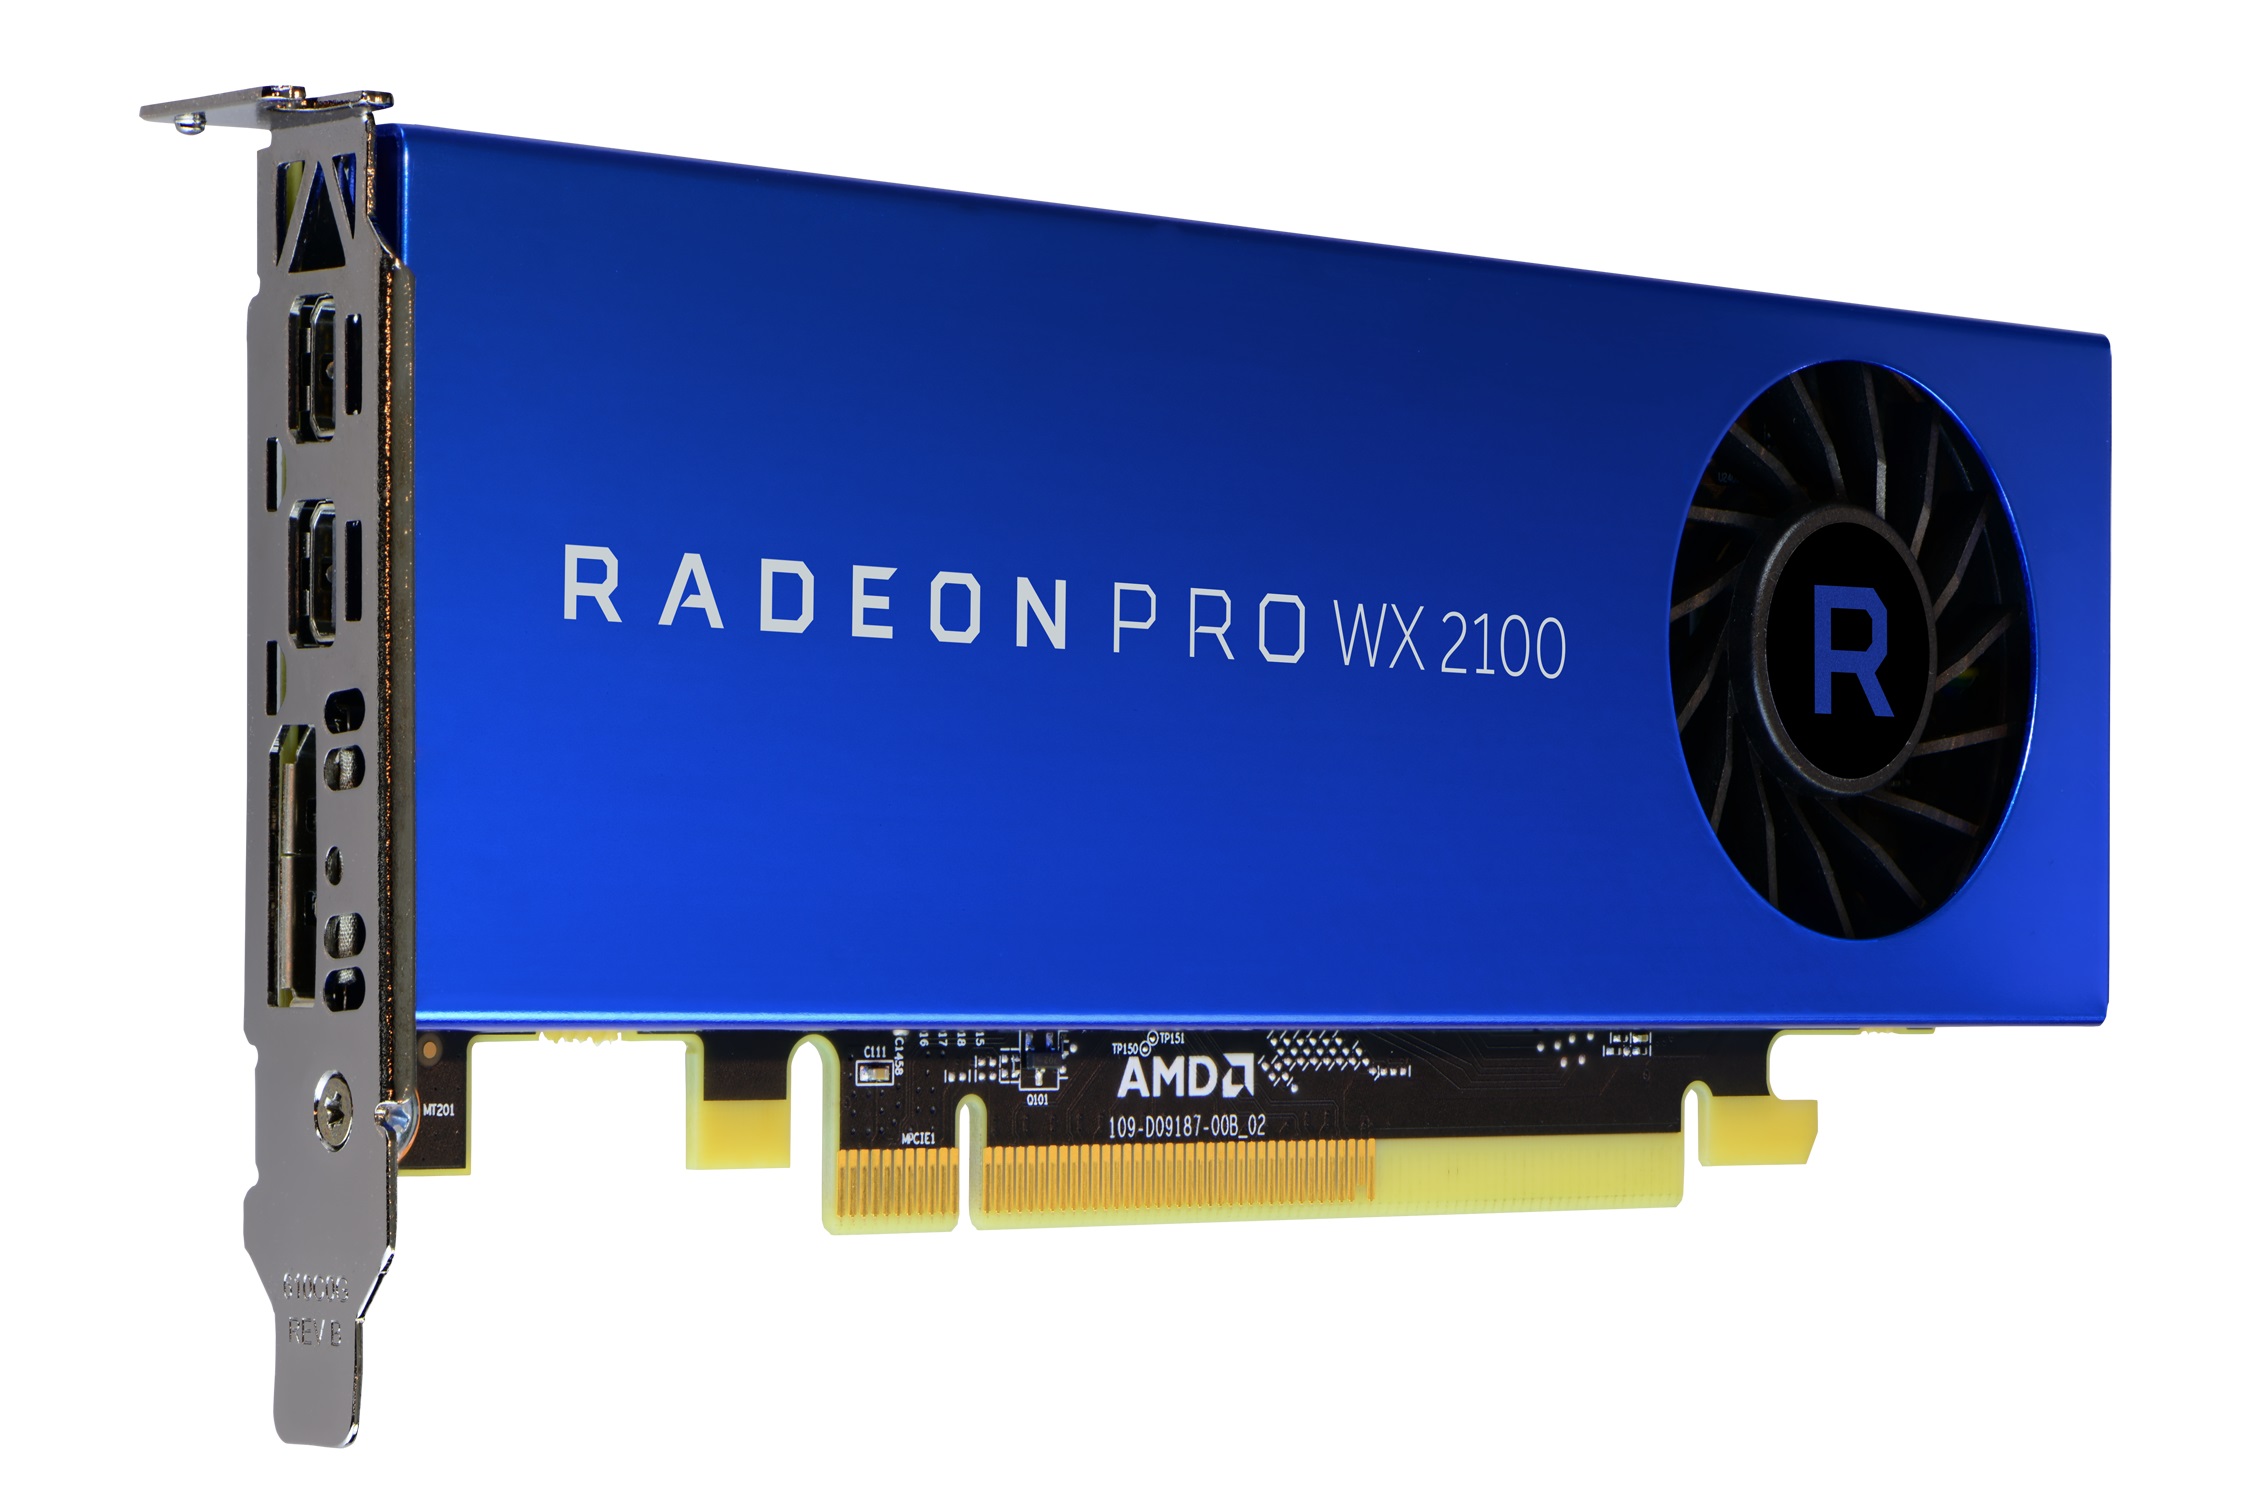 AMD Radeon Pro WX 2100